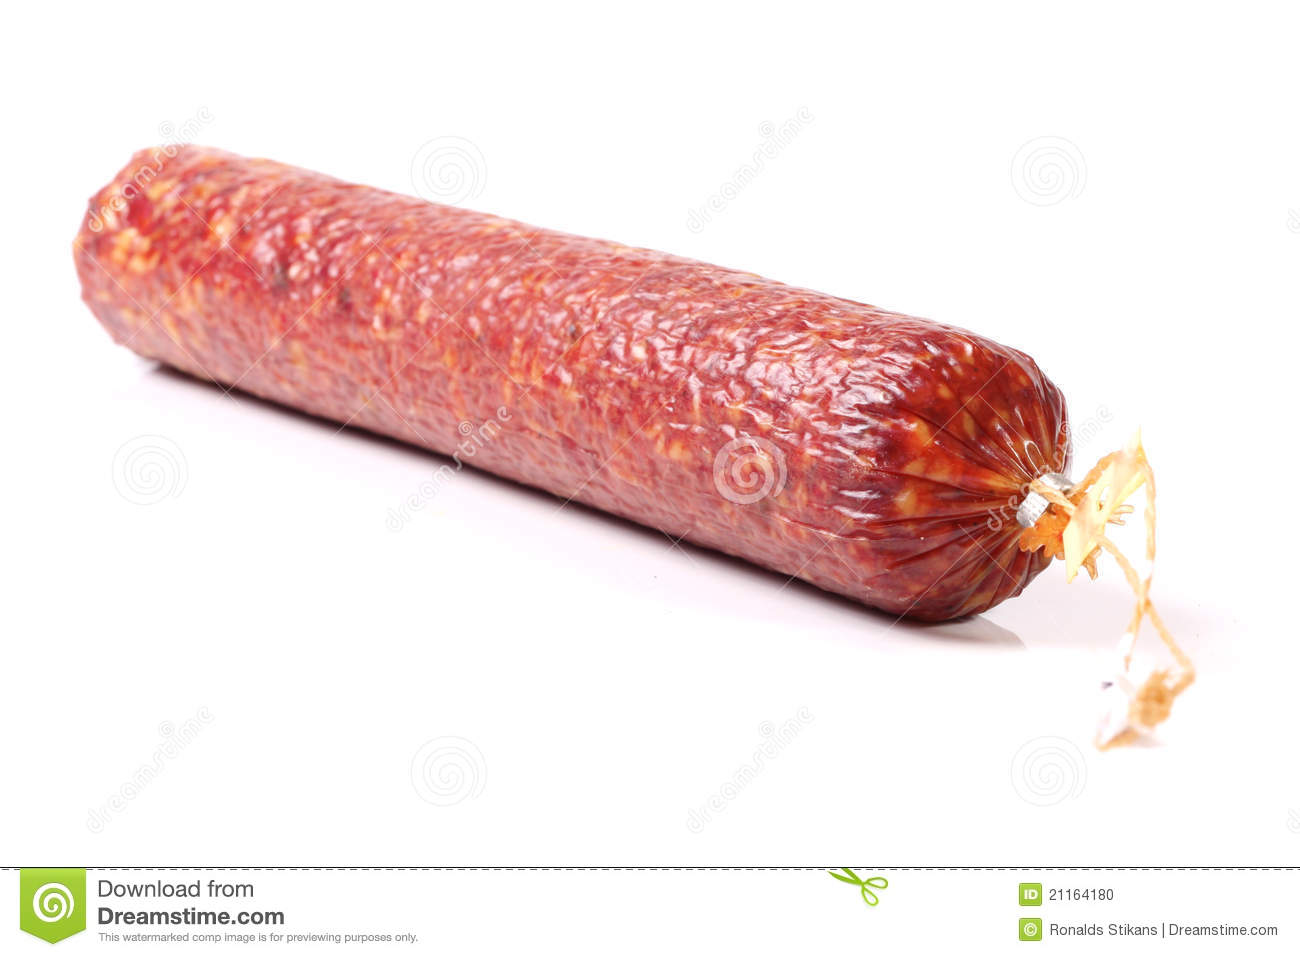 Salami Sausage Stock Photo   Image  21164180